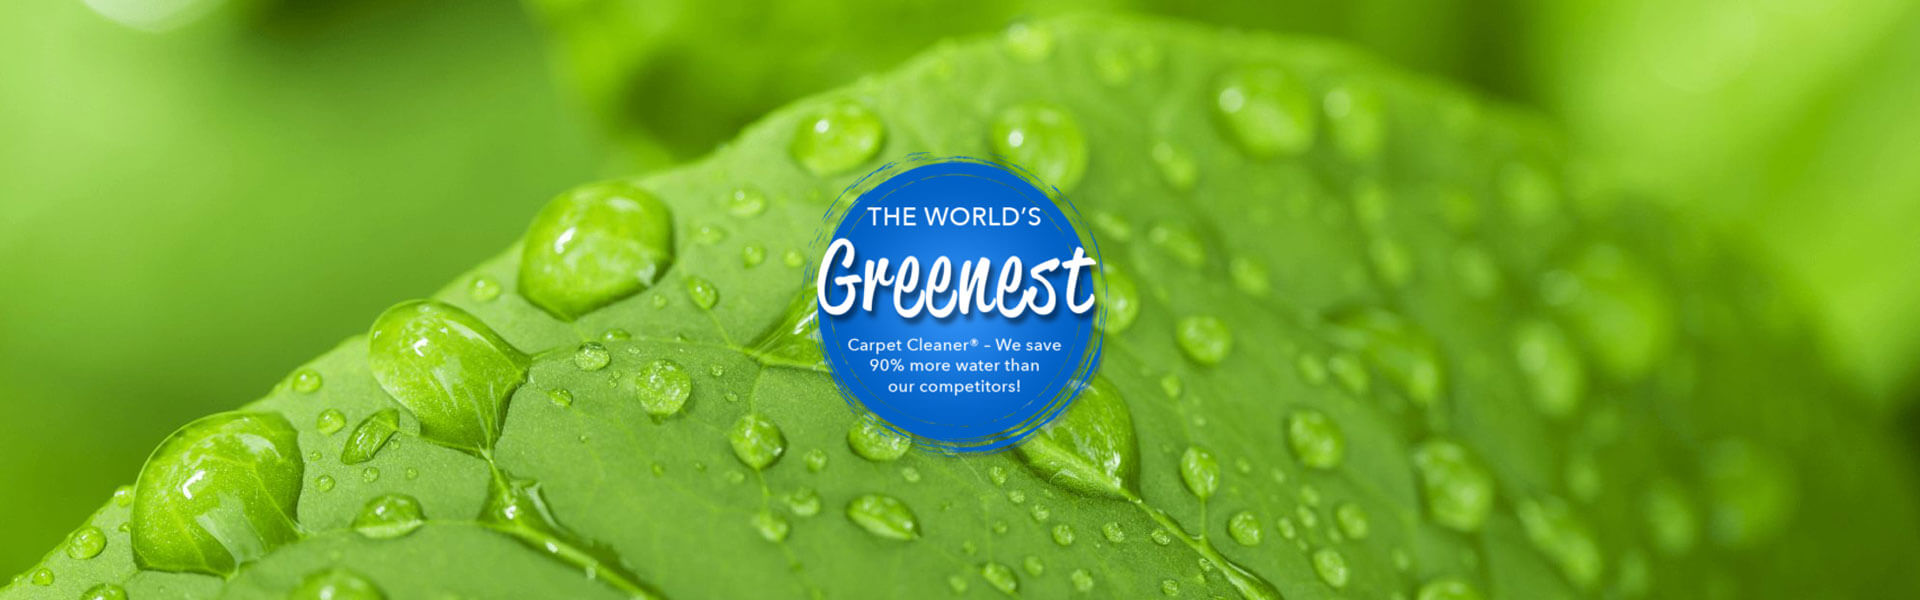 The world's greenest carpet cleaner